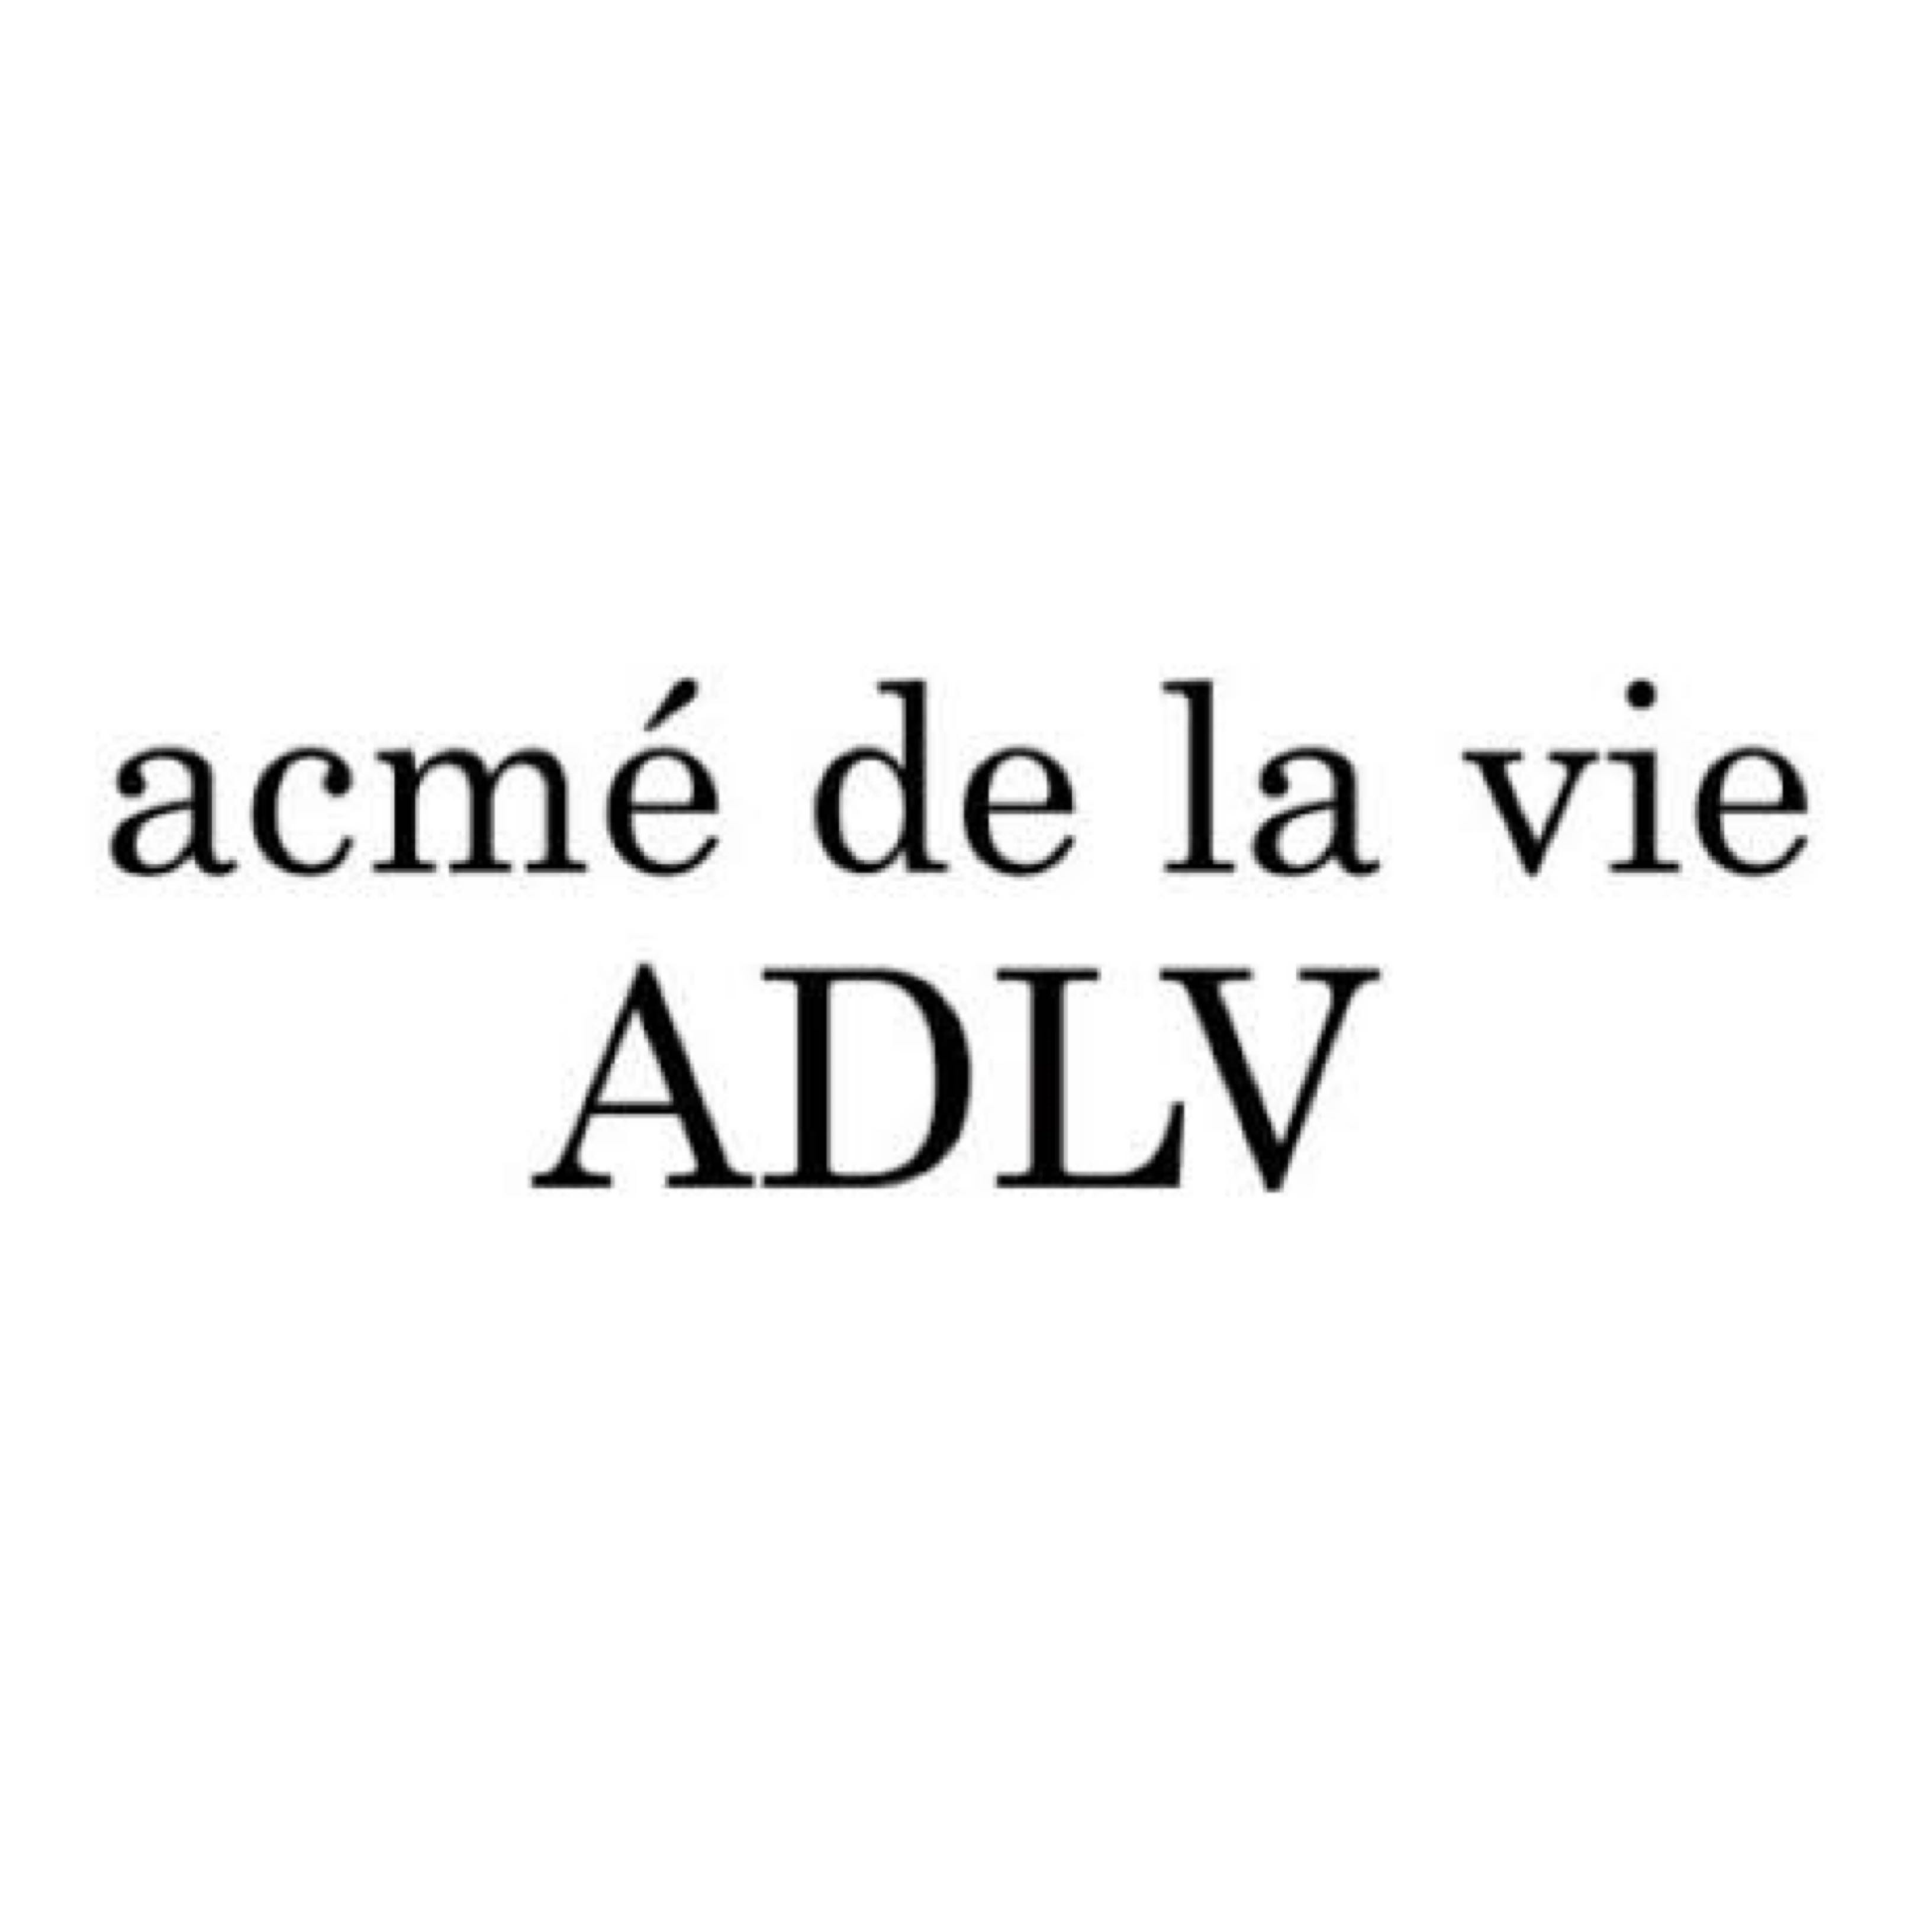 ADLV